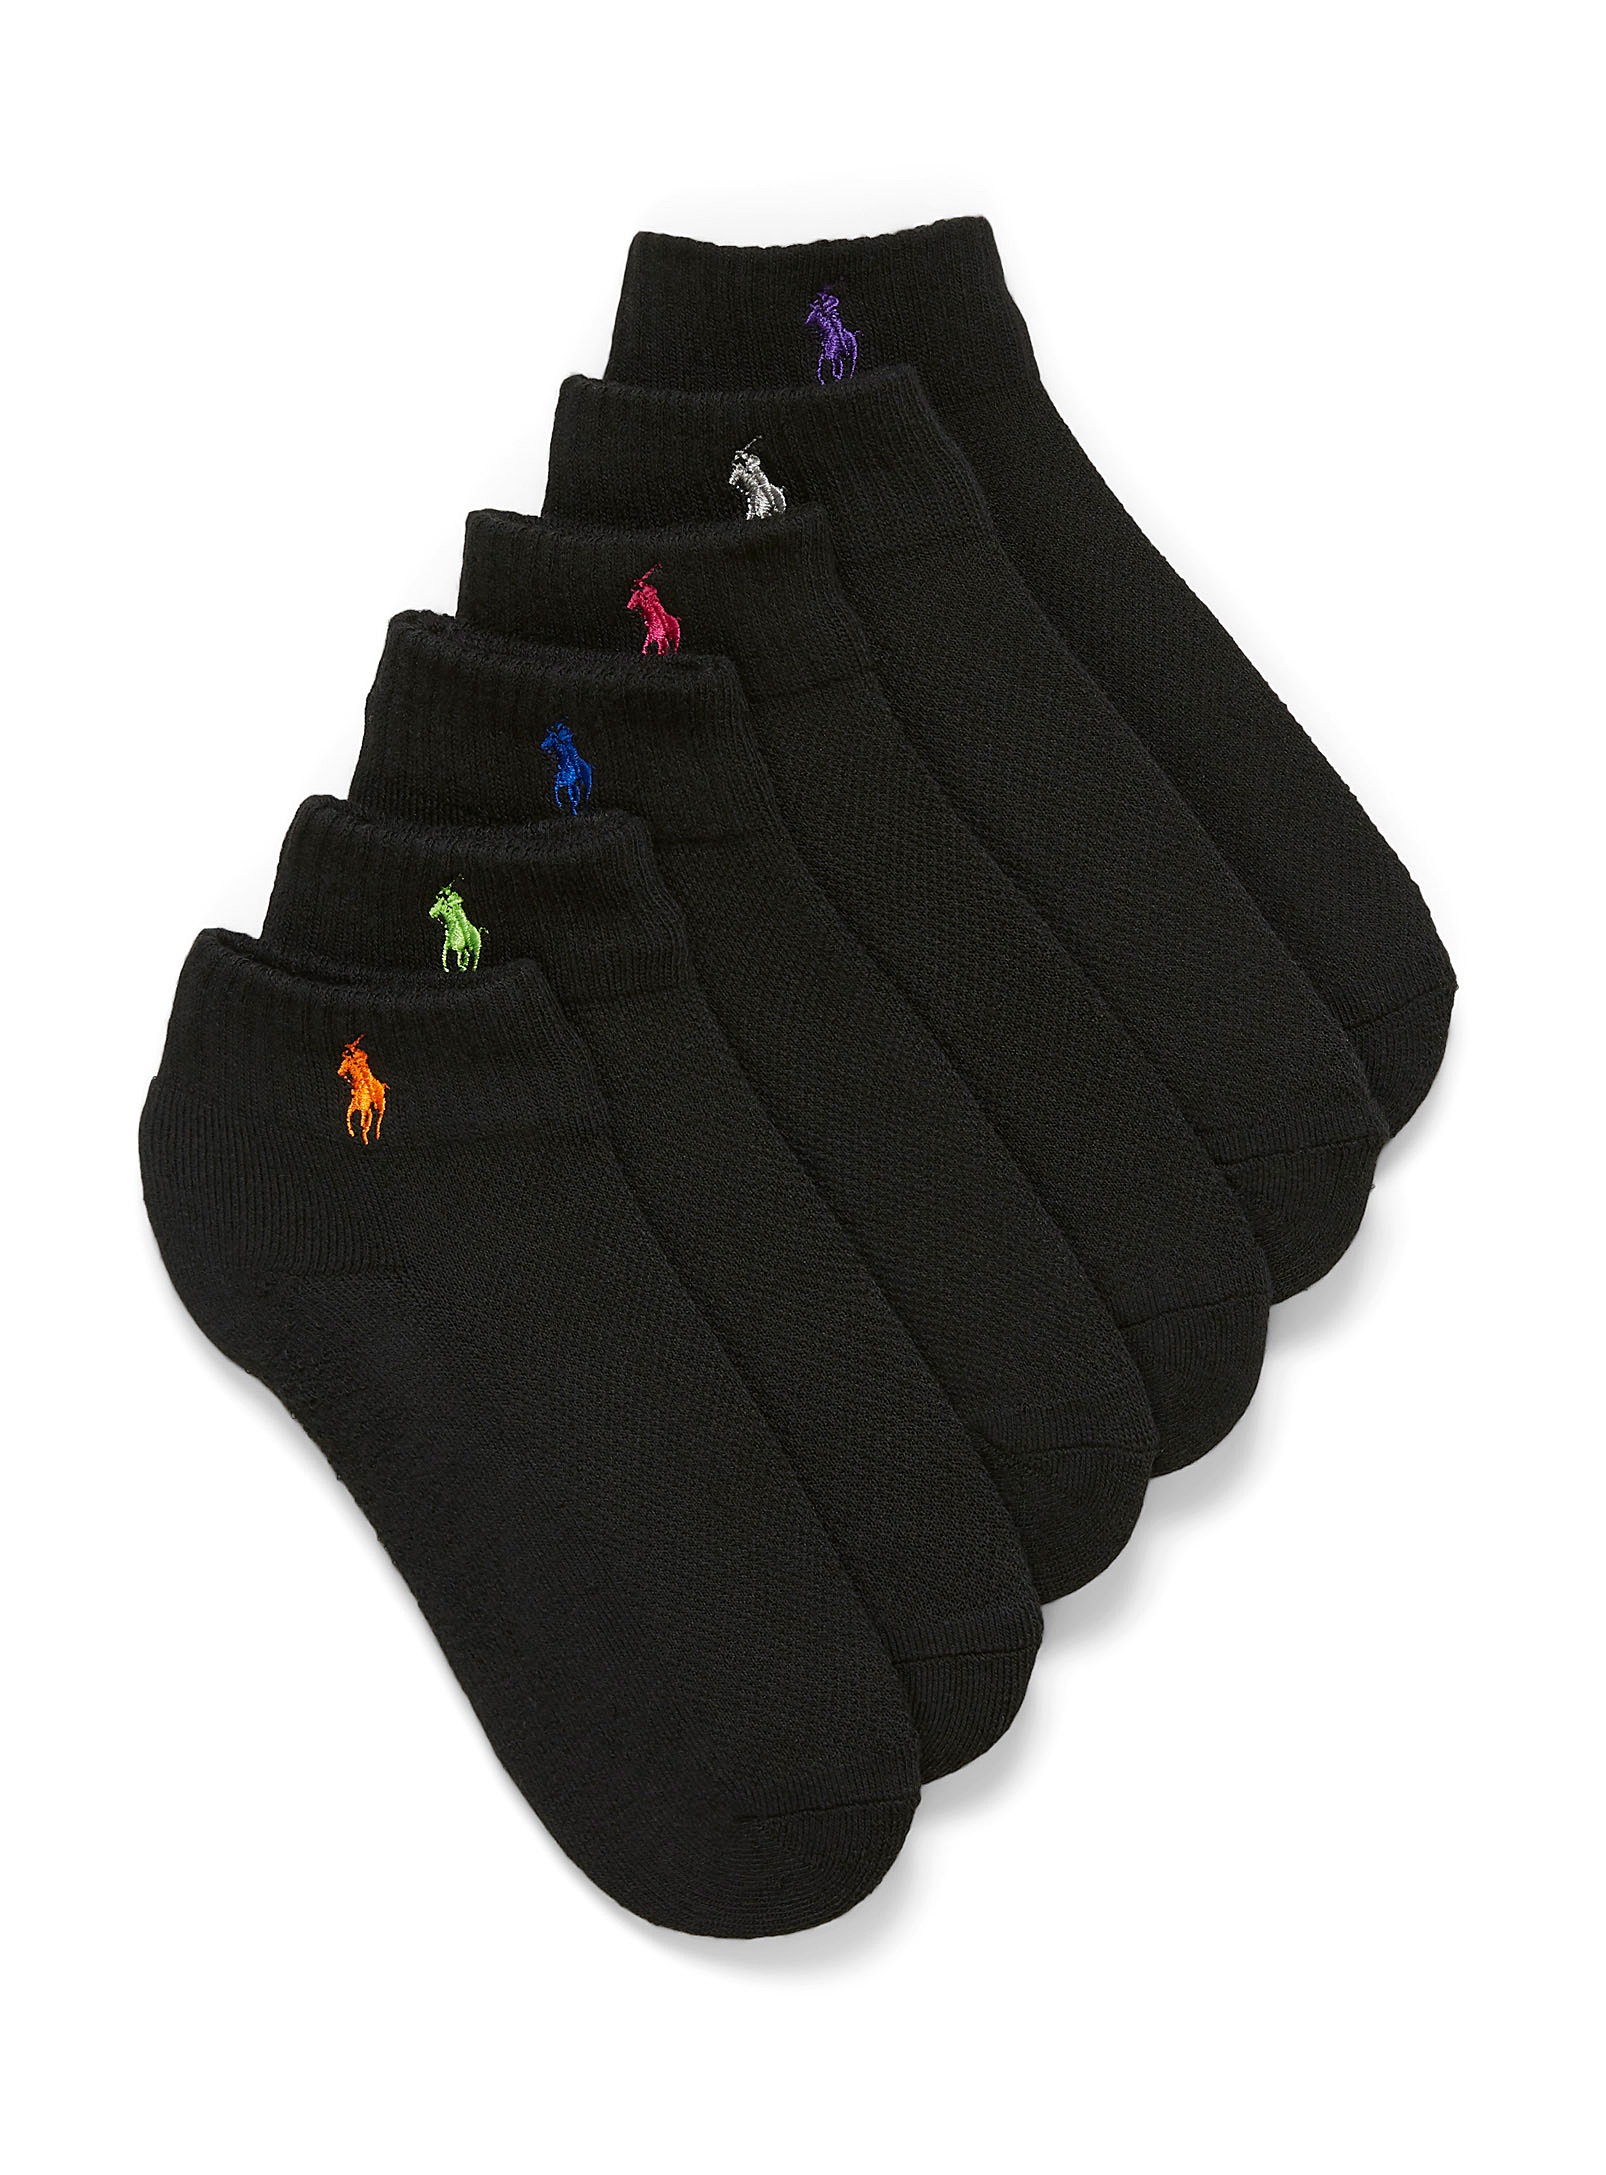 Polo Ralph Lauren - Women's Embroidered logo ankle socks Set of 6